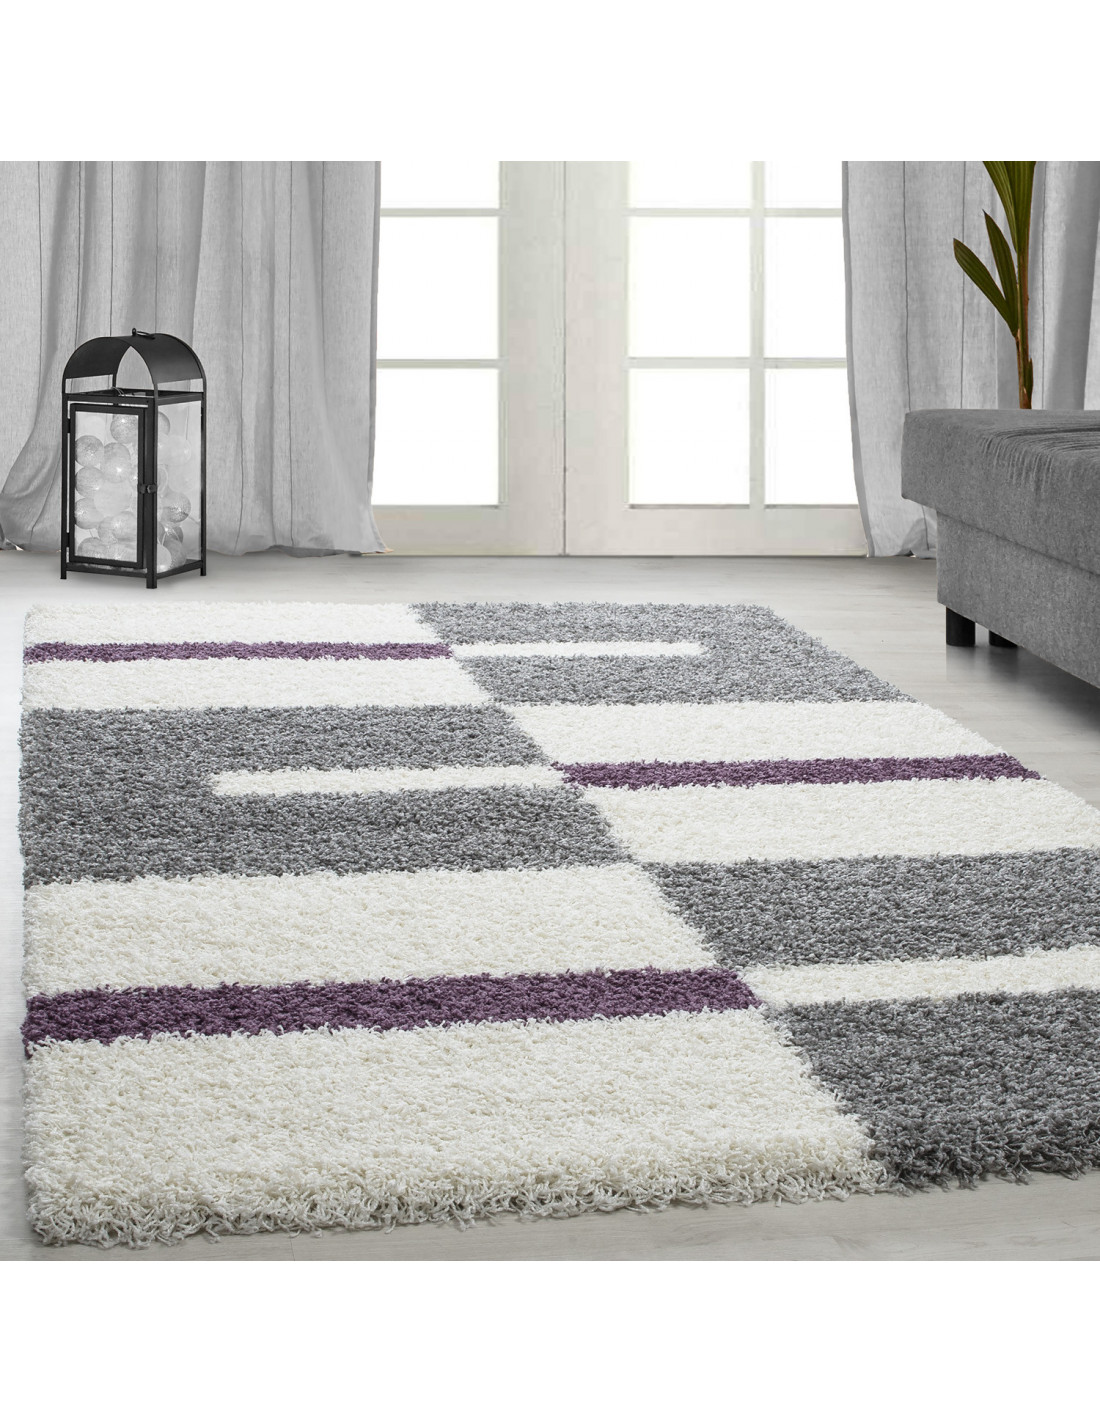 Shaggy carpet, pile height 3cm, gray-white-purple